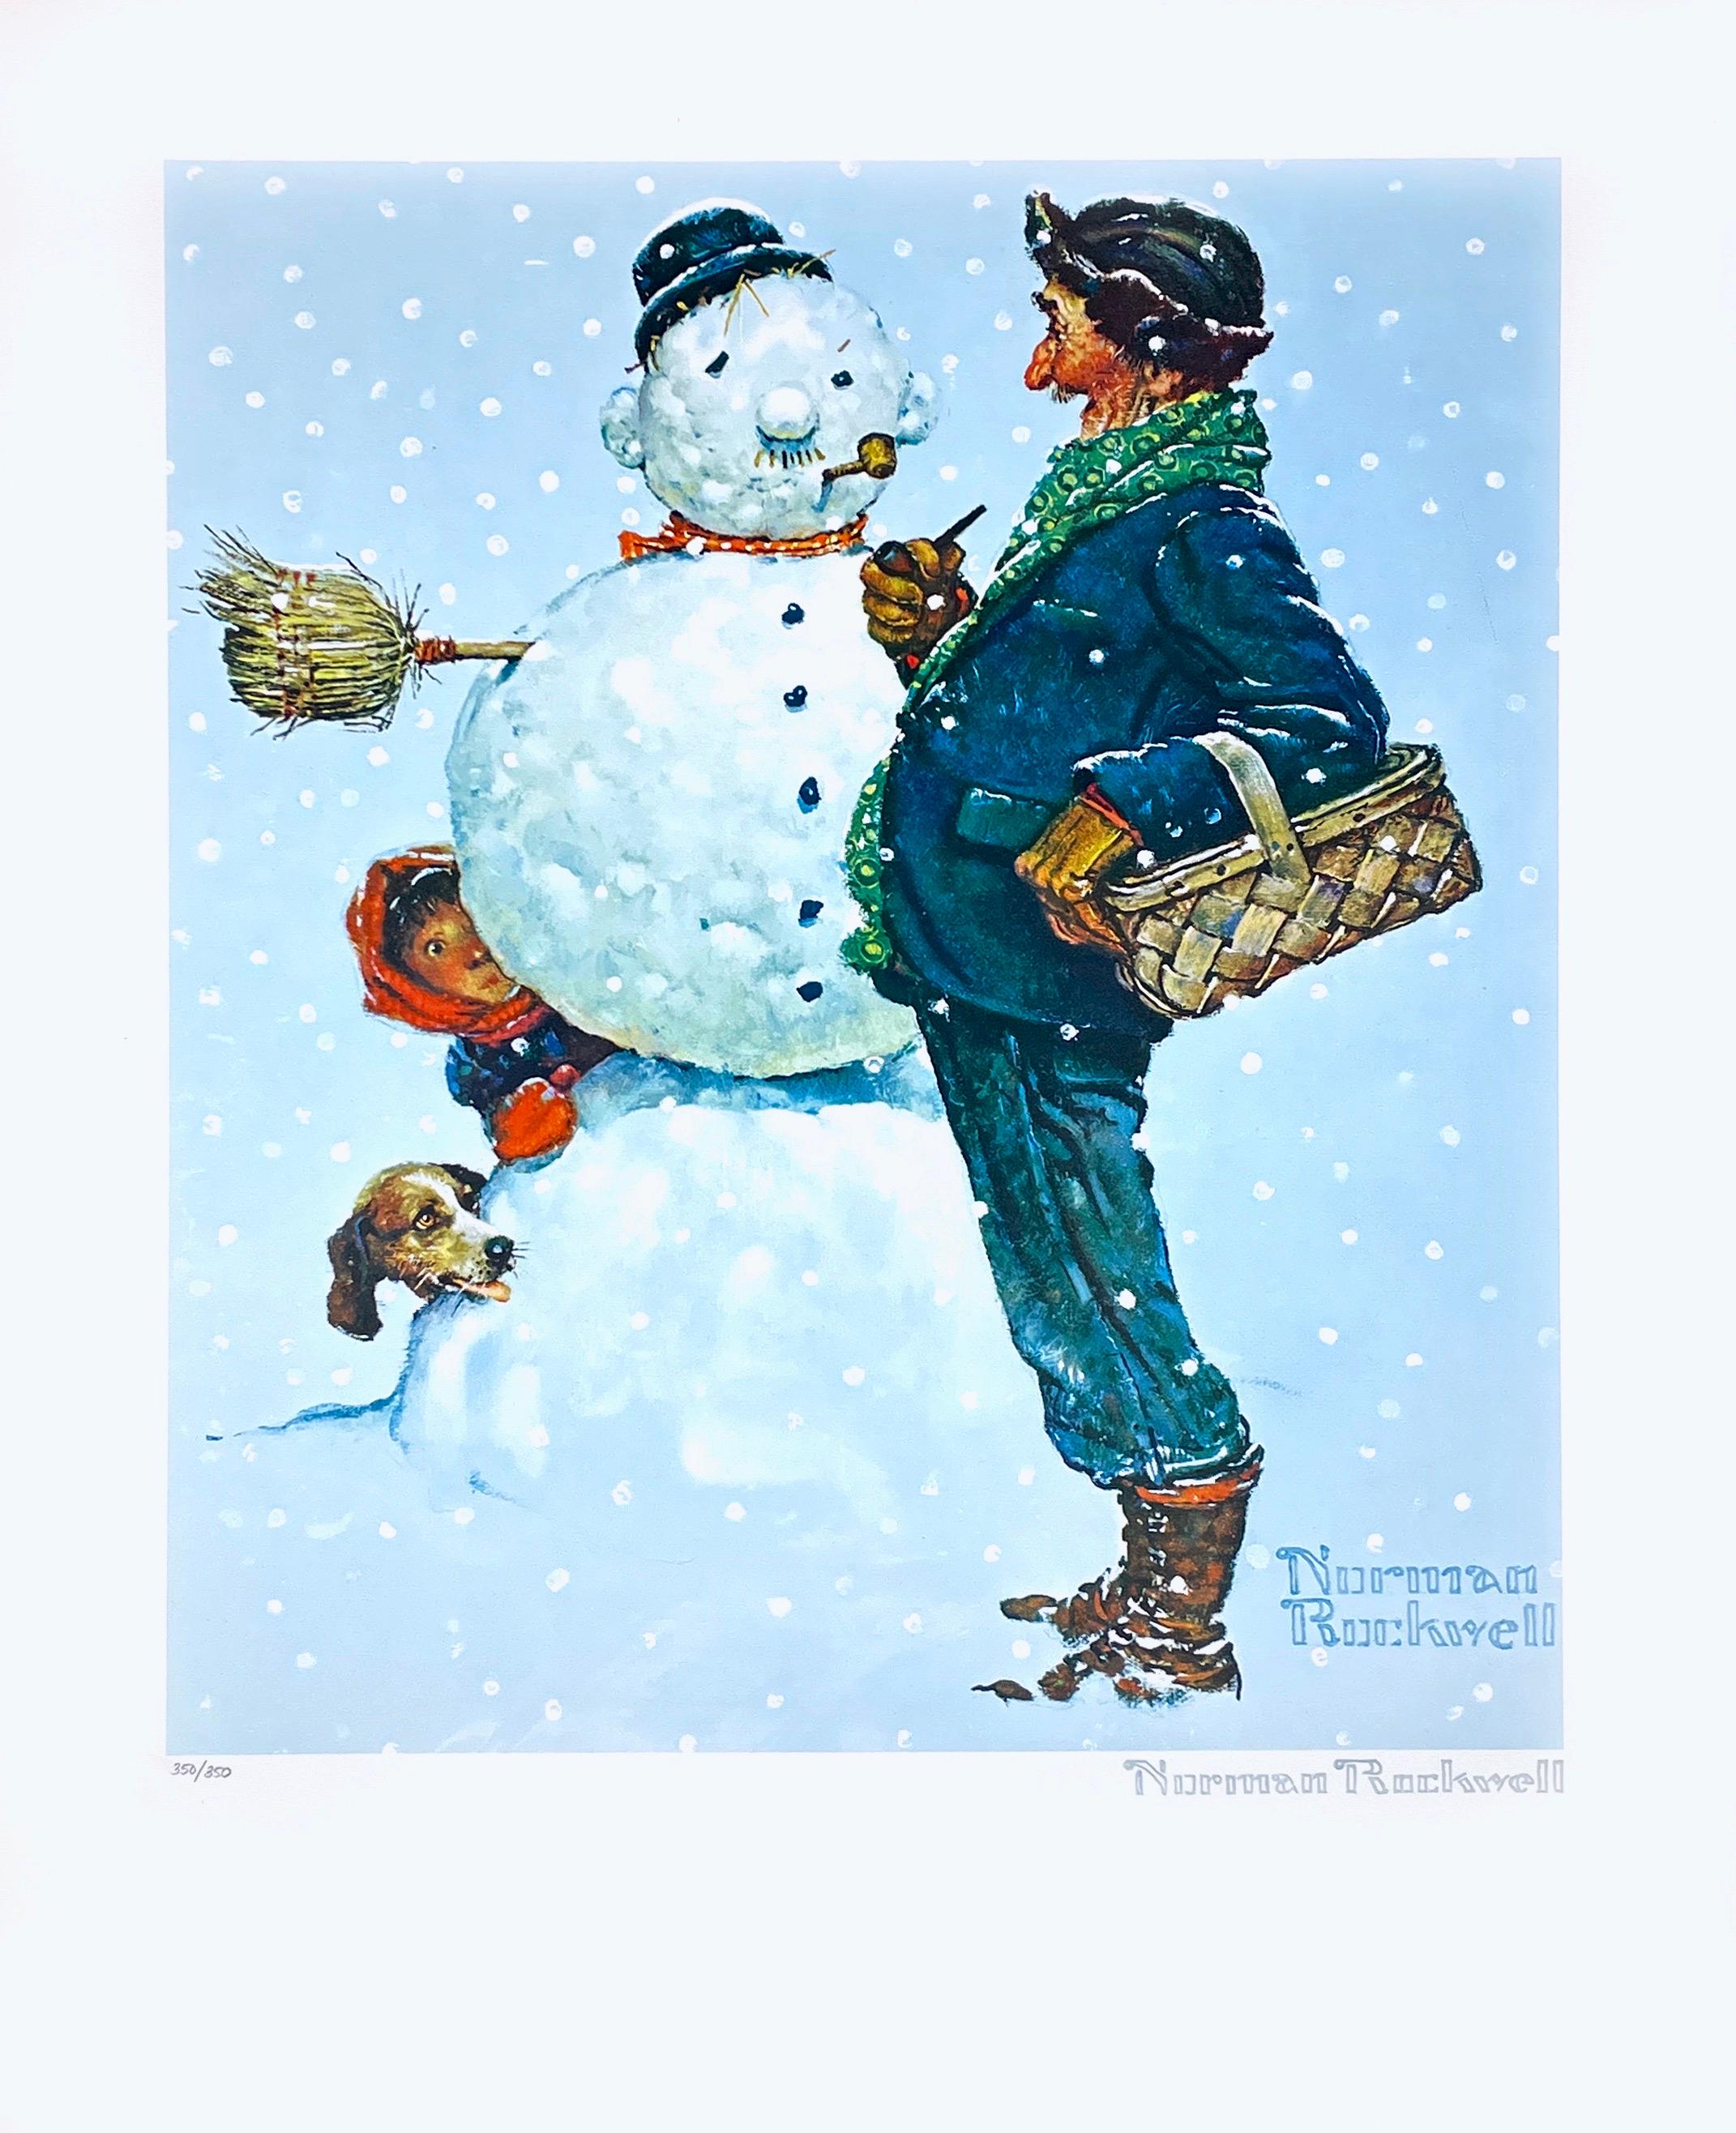 Rockwell, Sculpture de neige Bonhomme de neige - Print de After Norman Rockwell